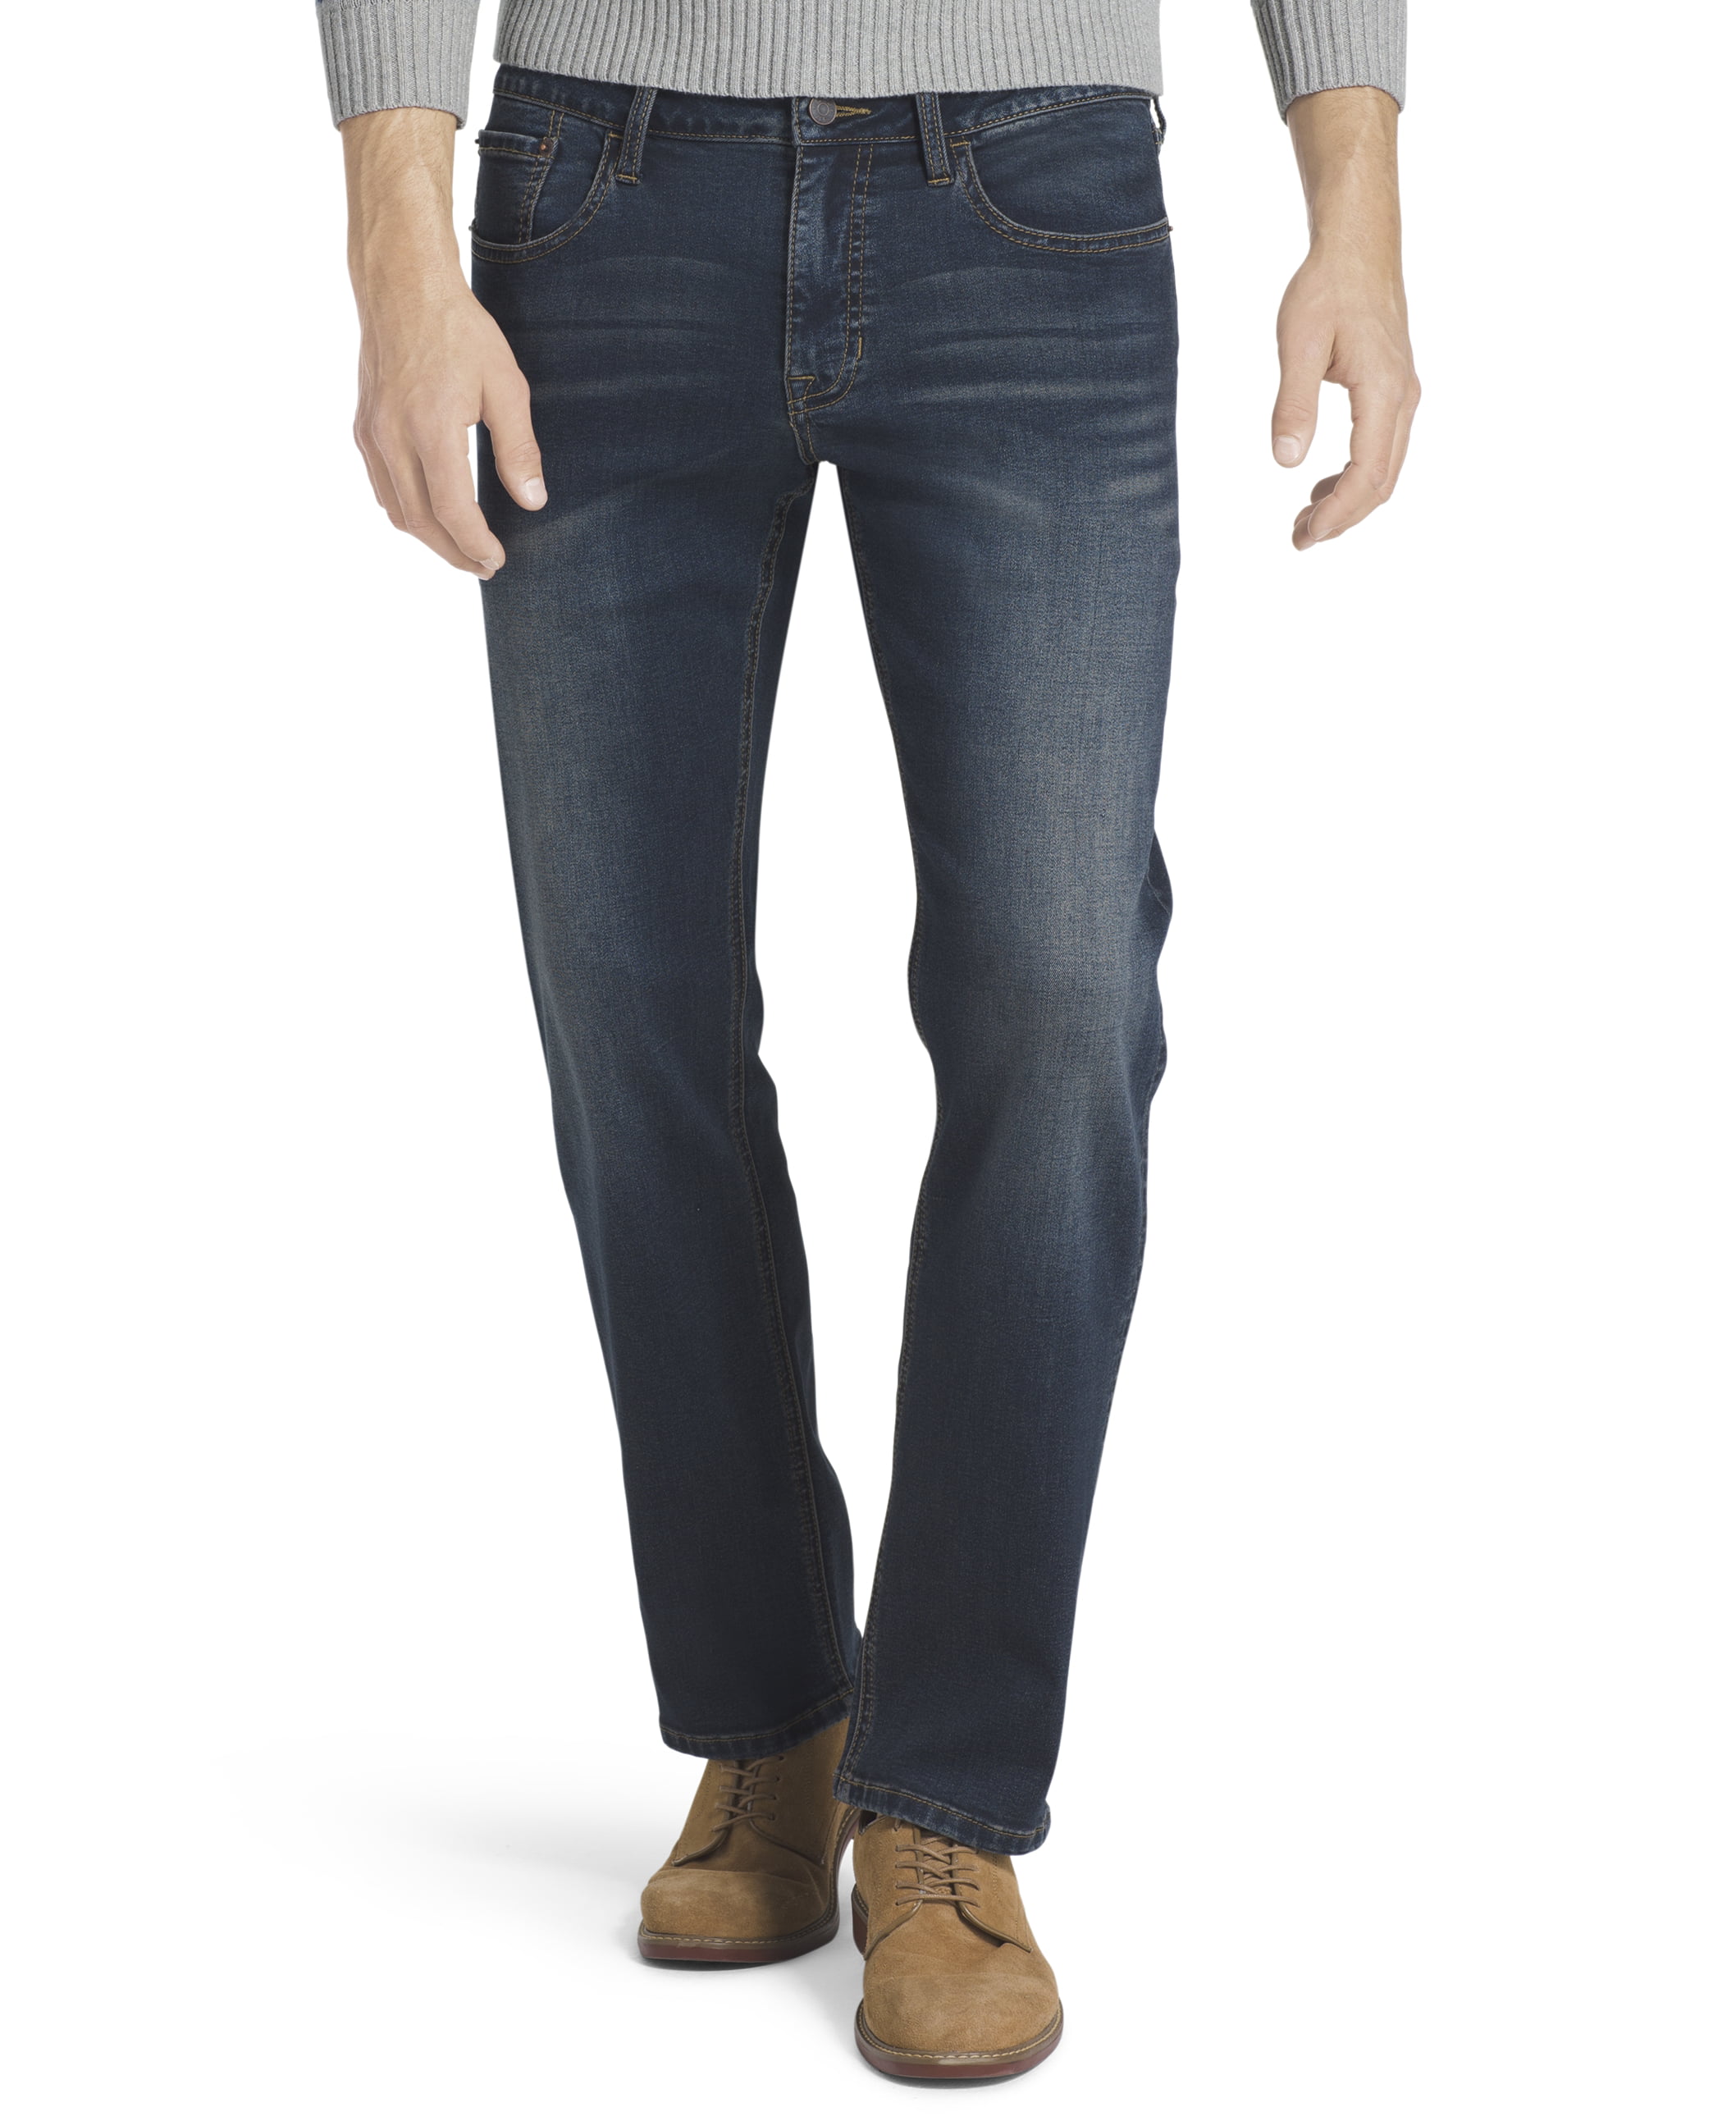 IZOD - IZOD Straight-Fit Comfort Stretch Jeans for Men - Walmart.com ...